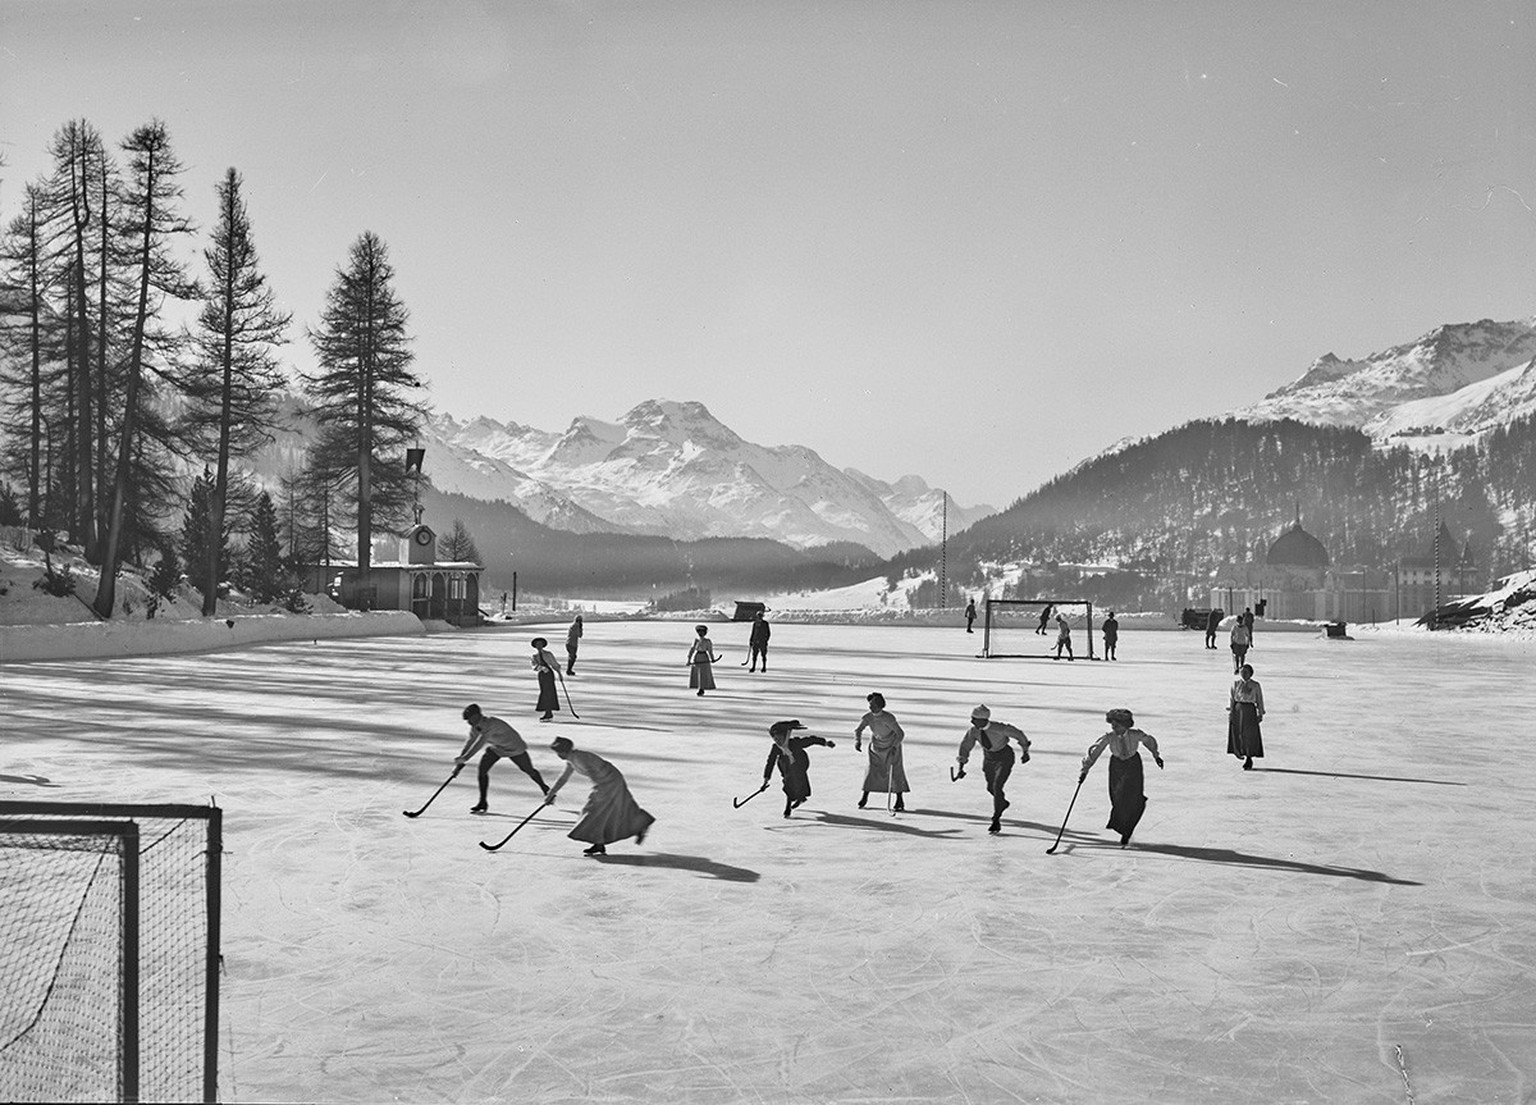 Un match de bandy mixte, Saint-Moritz, 1910.
https://commons.wikimedia.org/wiki/File:CH-NB_Photoglob-Wehrli_EAD-WEHR-12437-B.tif